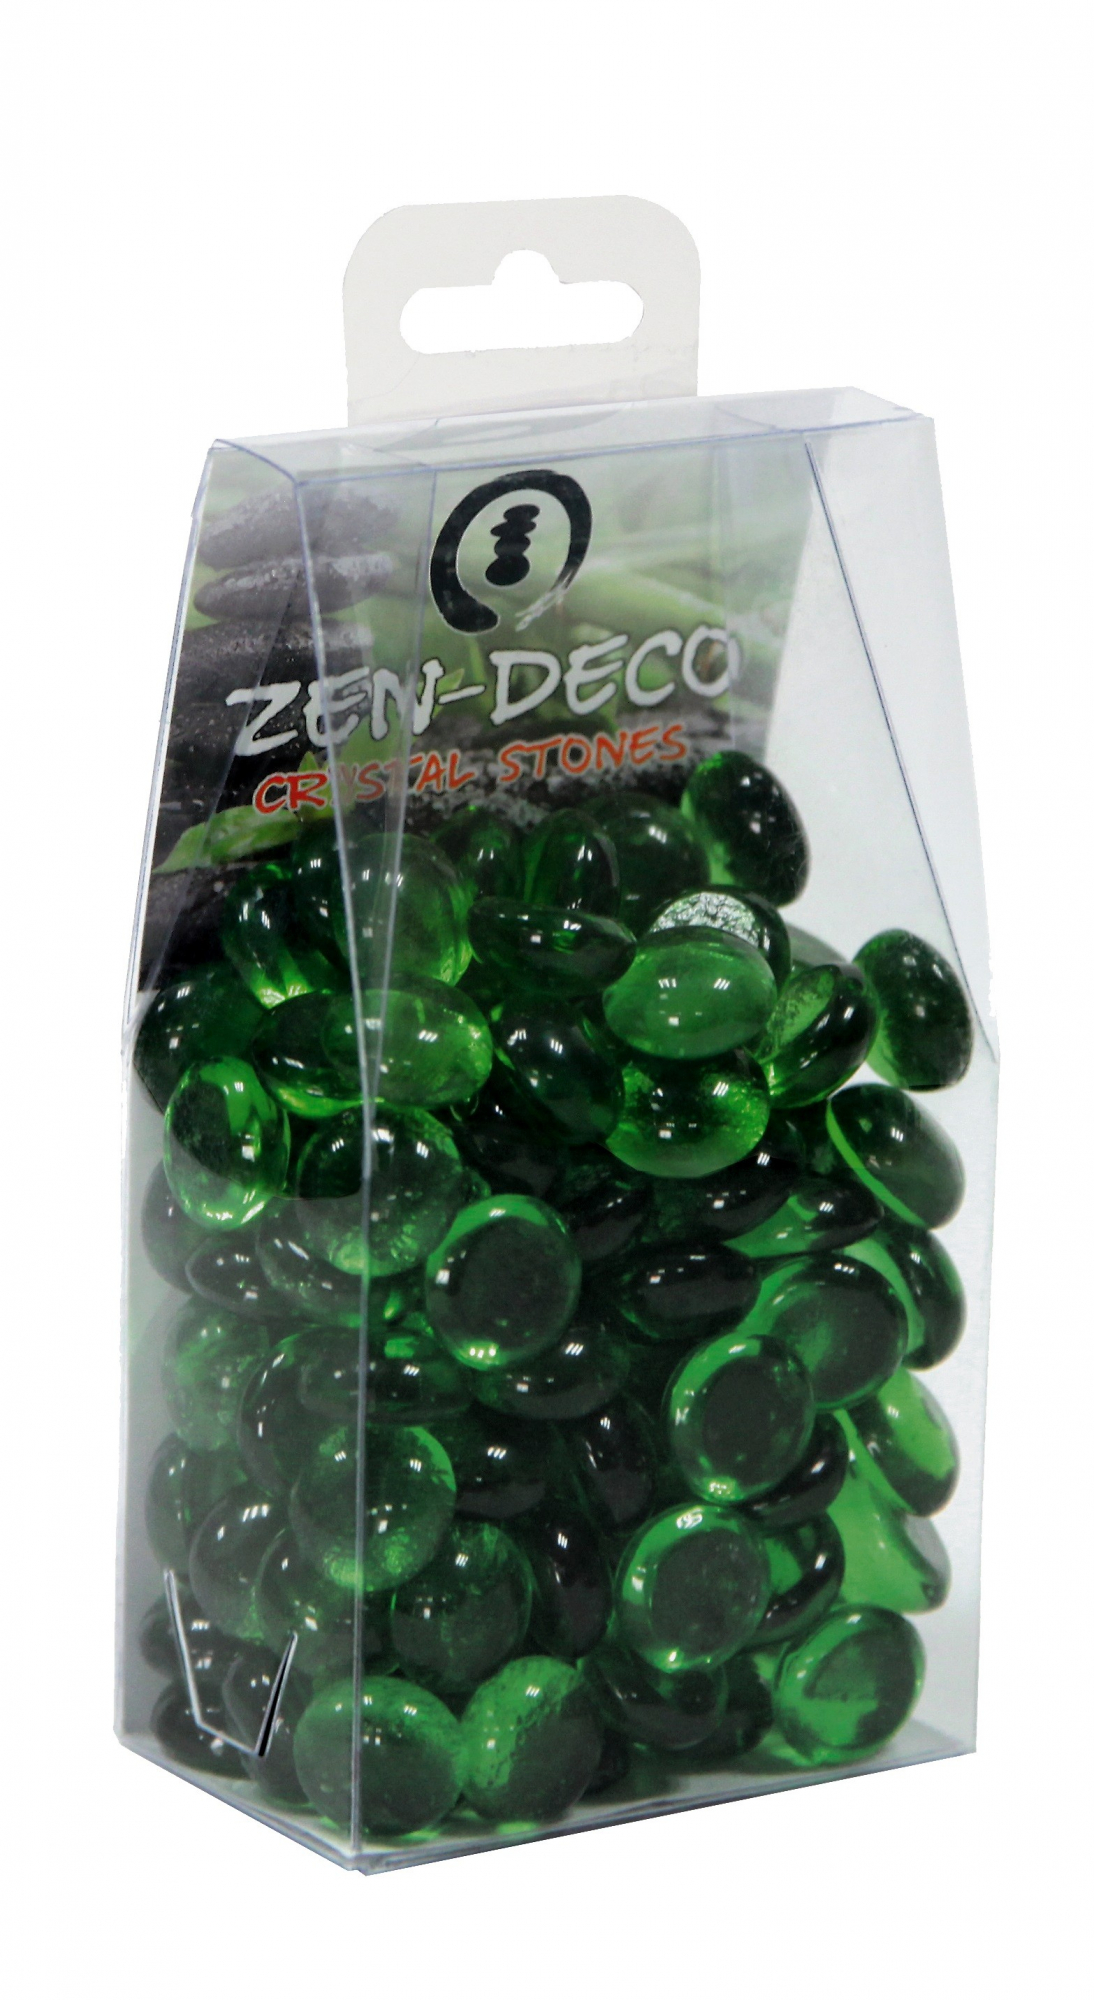 SuperFish Zen Deco - Crystal Stones galets verre